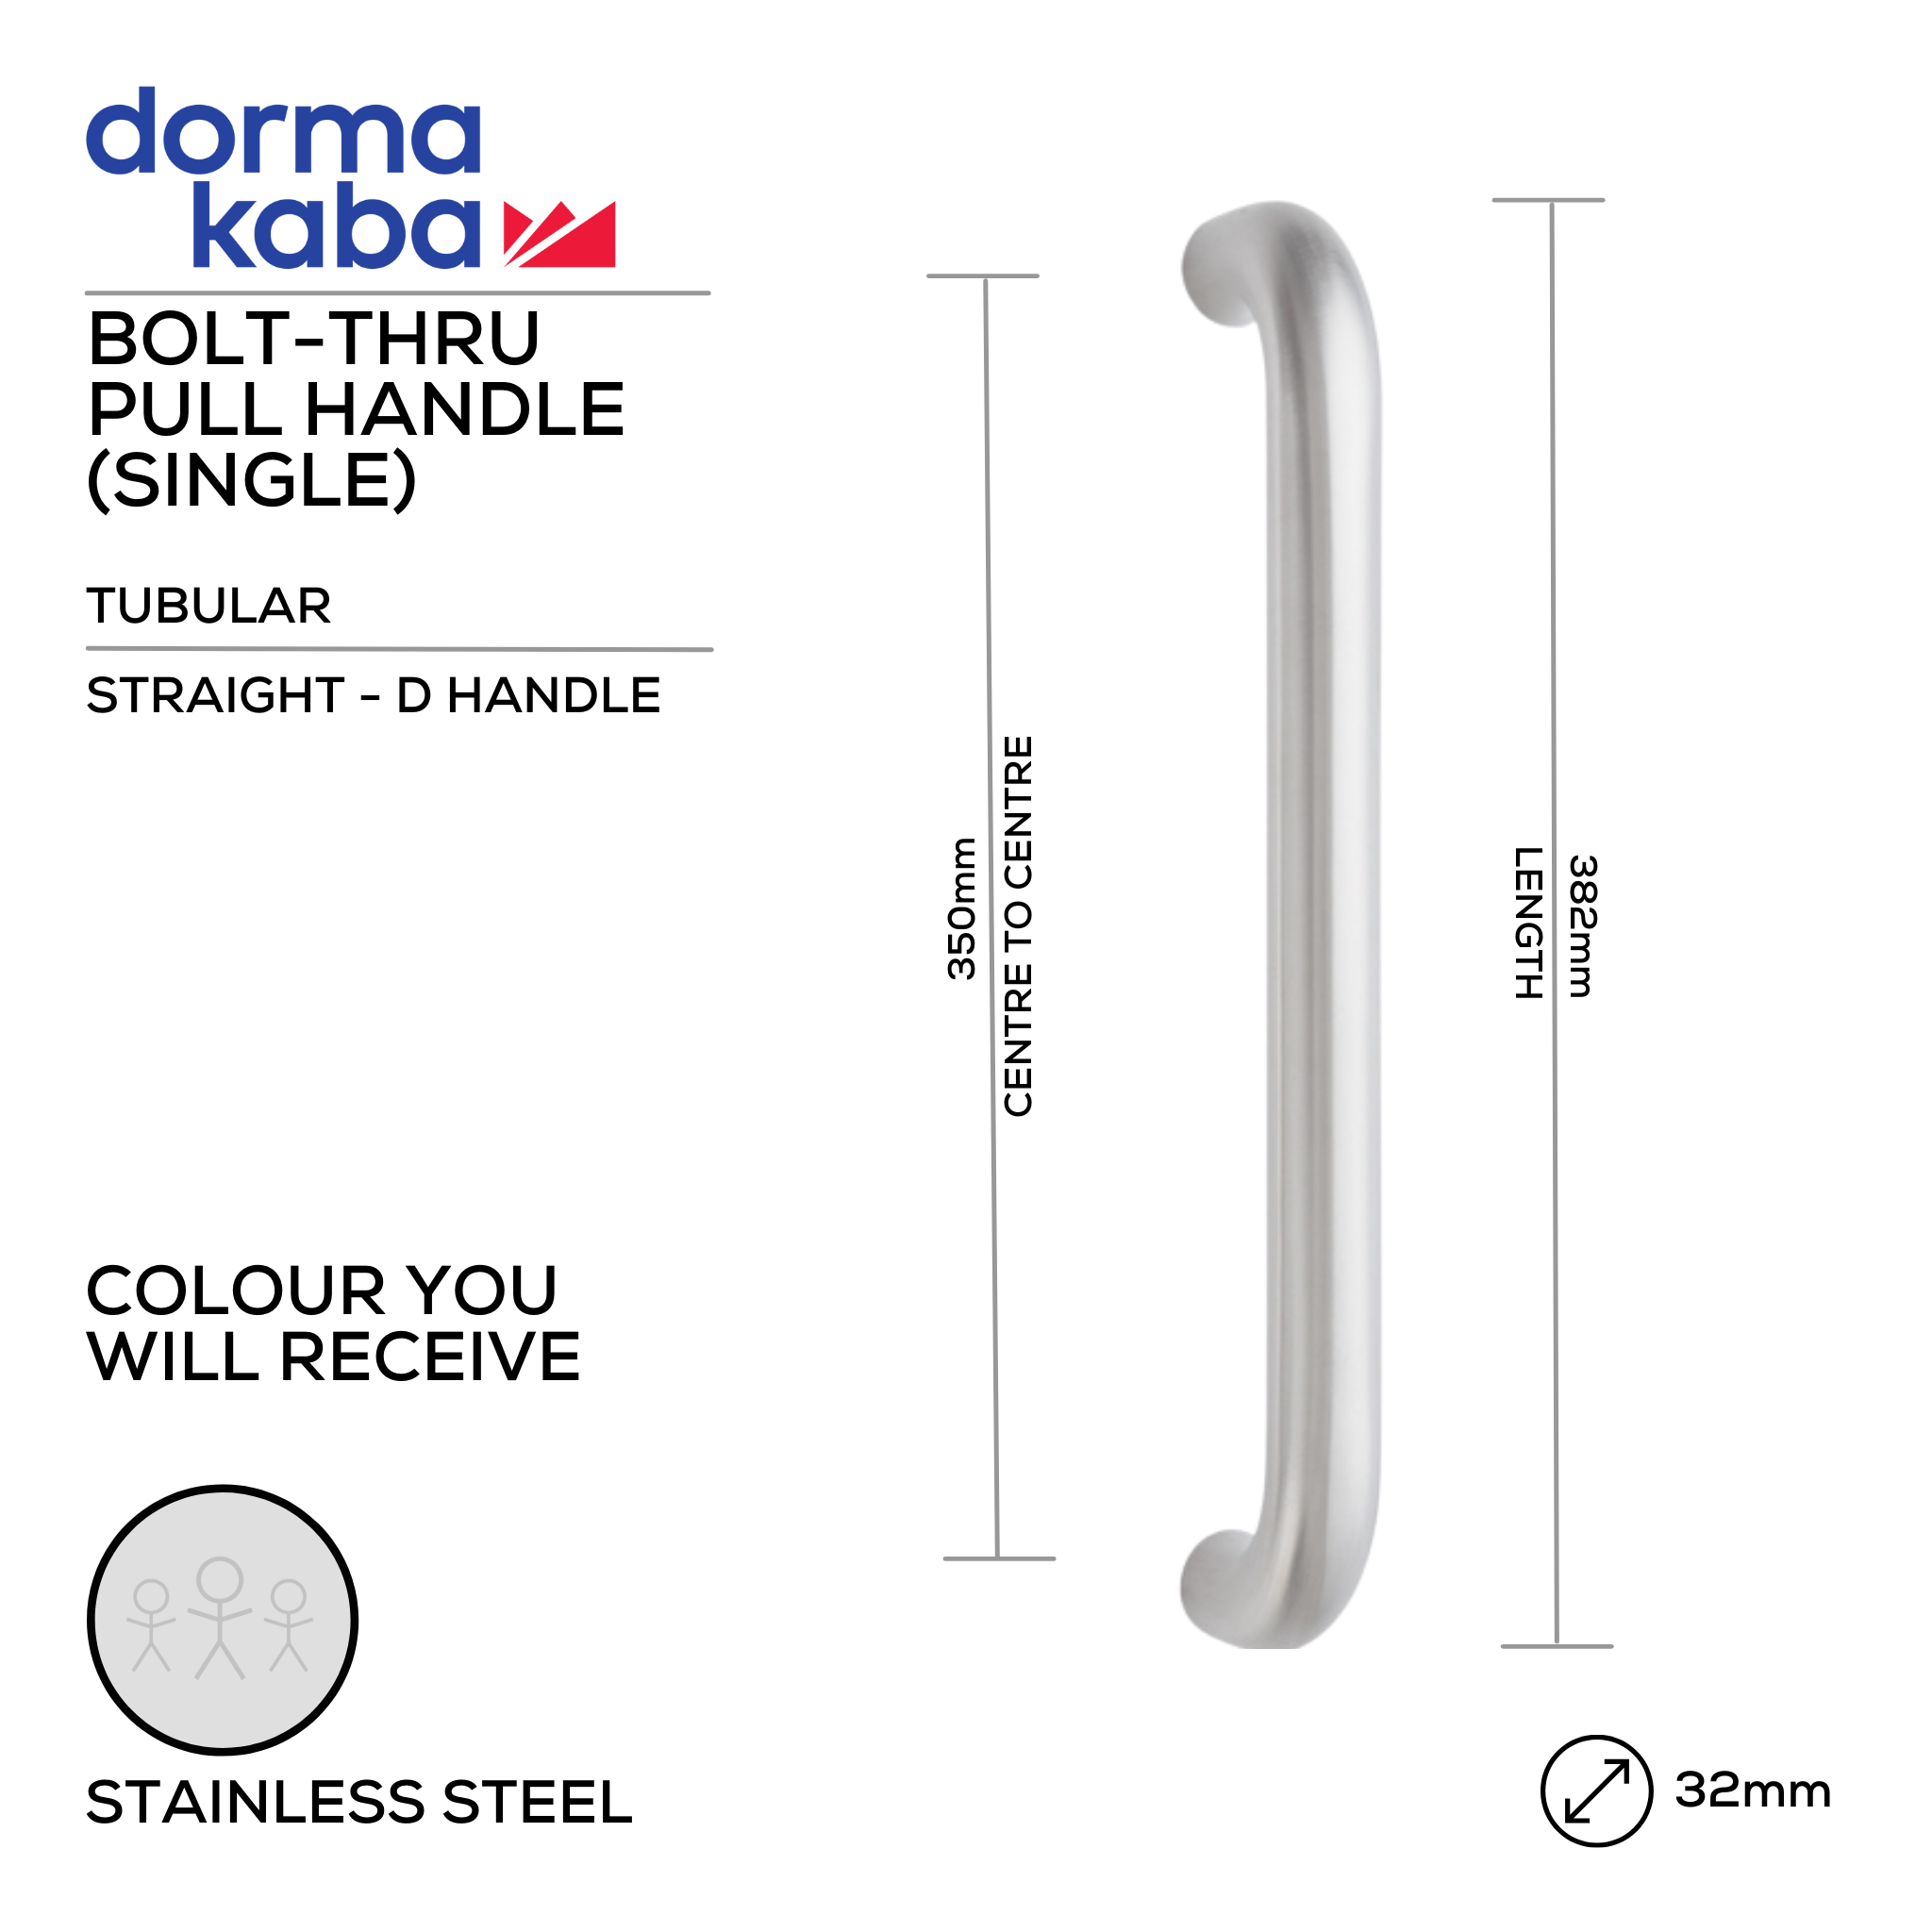 DPH 213 BT , Pull Handle, Tubular, Straight, D Handle, BoltThru, 32mm (Ø) x 382mm (l) x 350mm (ctc), Stainless Steel, DORMAKABA